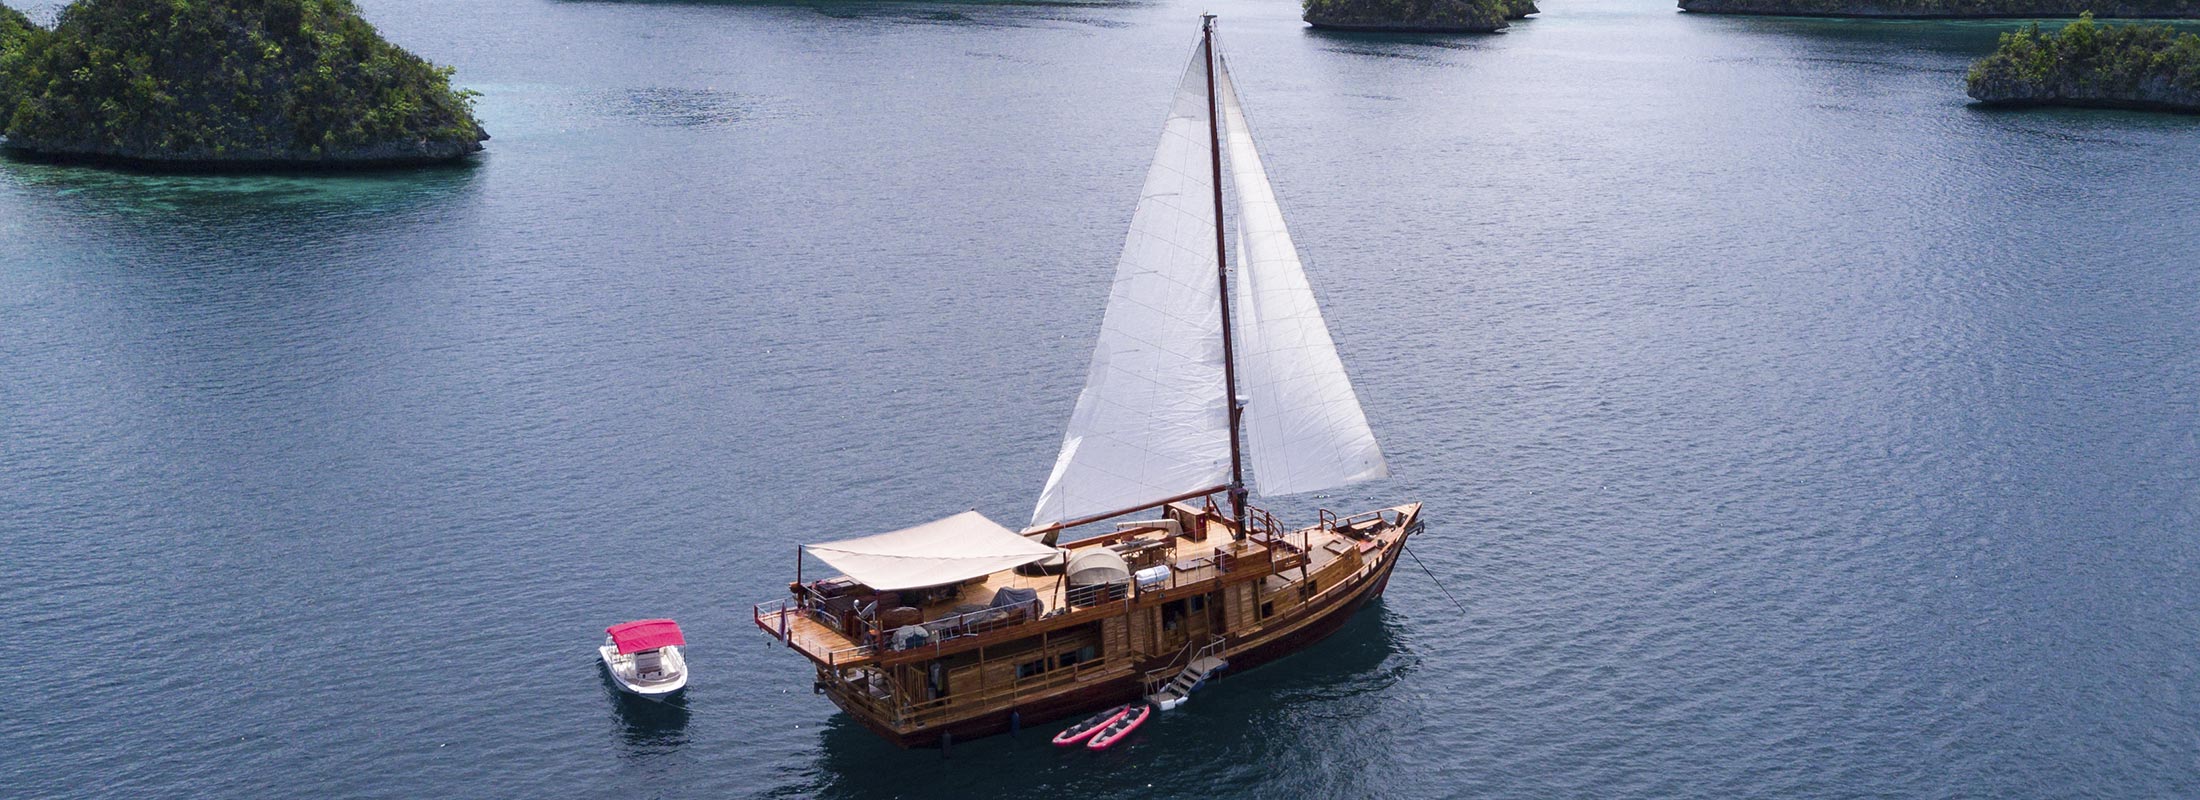 Sequoia-sailing-yacht-charter-a-yacht-slider1.jpg